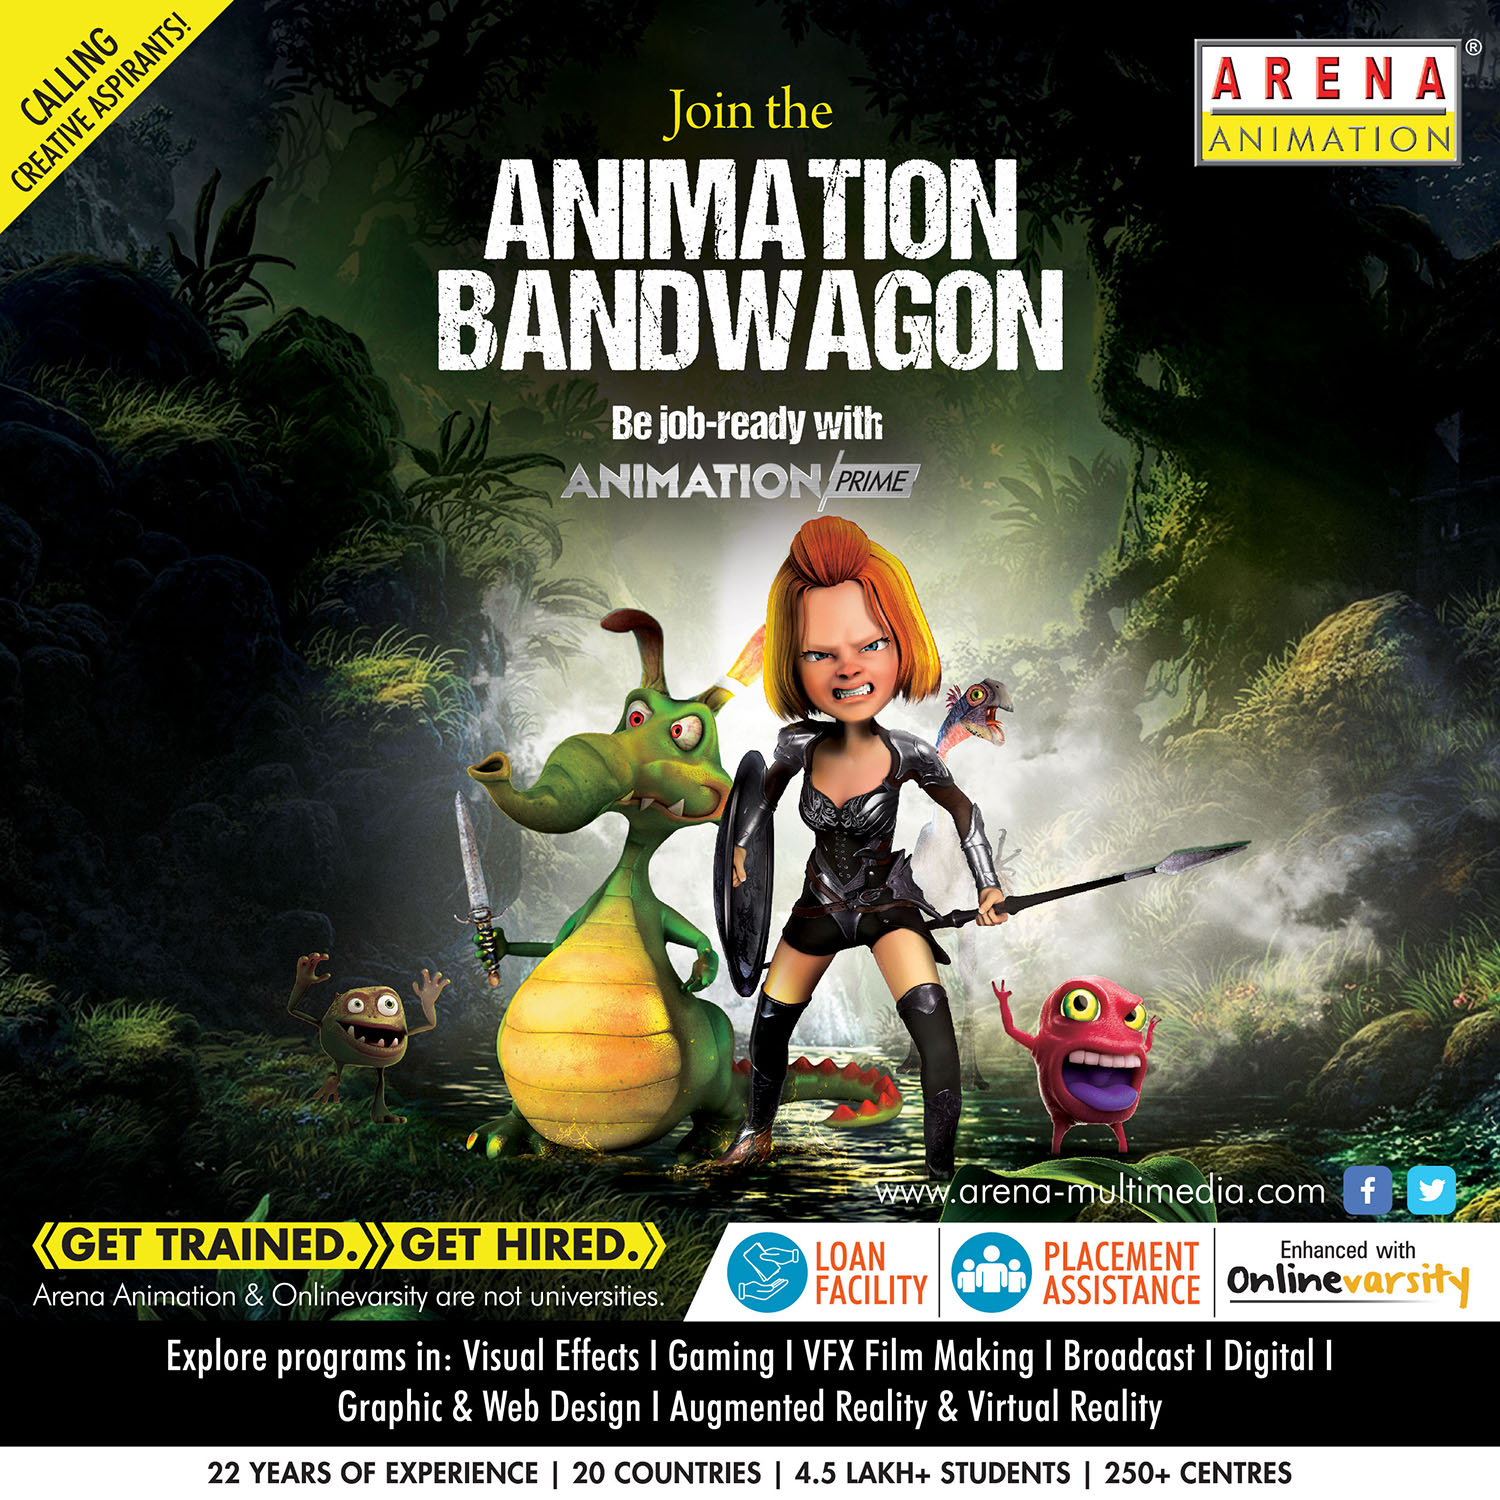 Arena Animation Uttarpara in Kolkata - Best in Placement